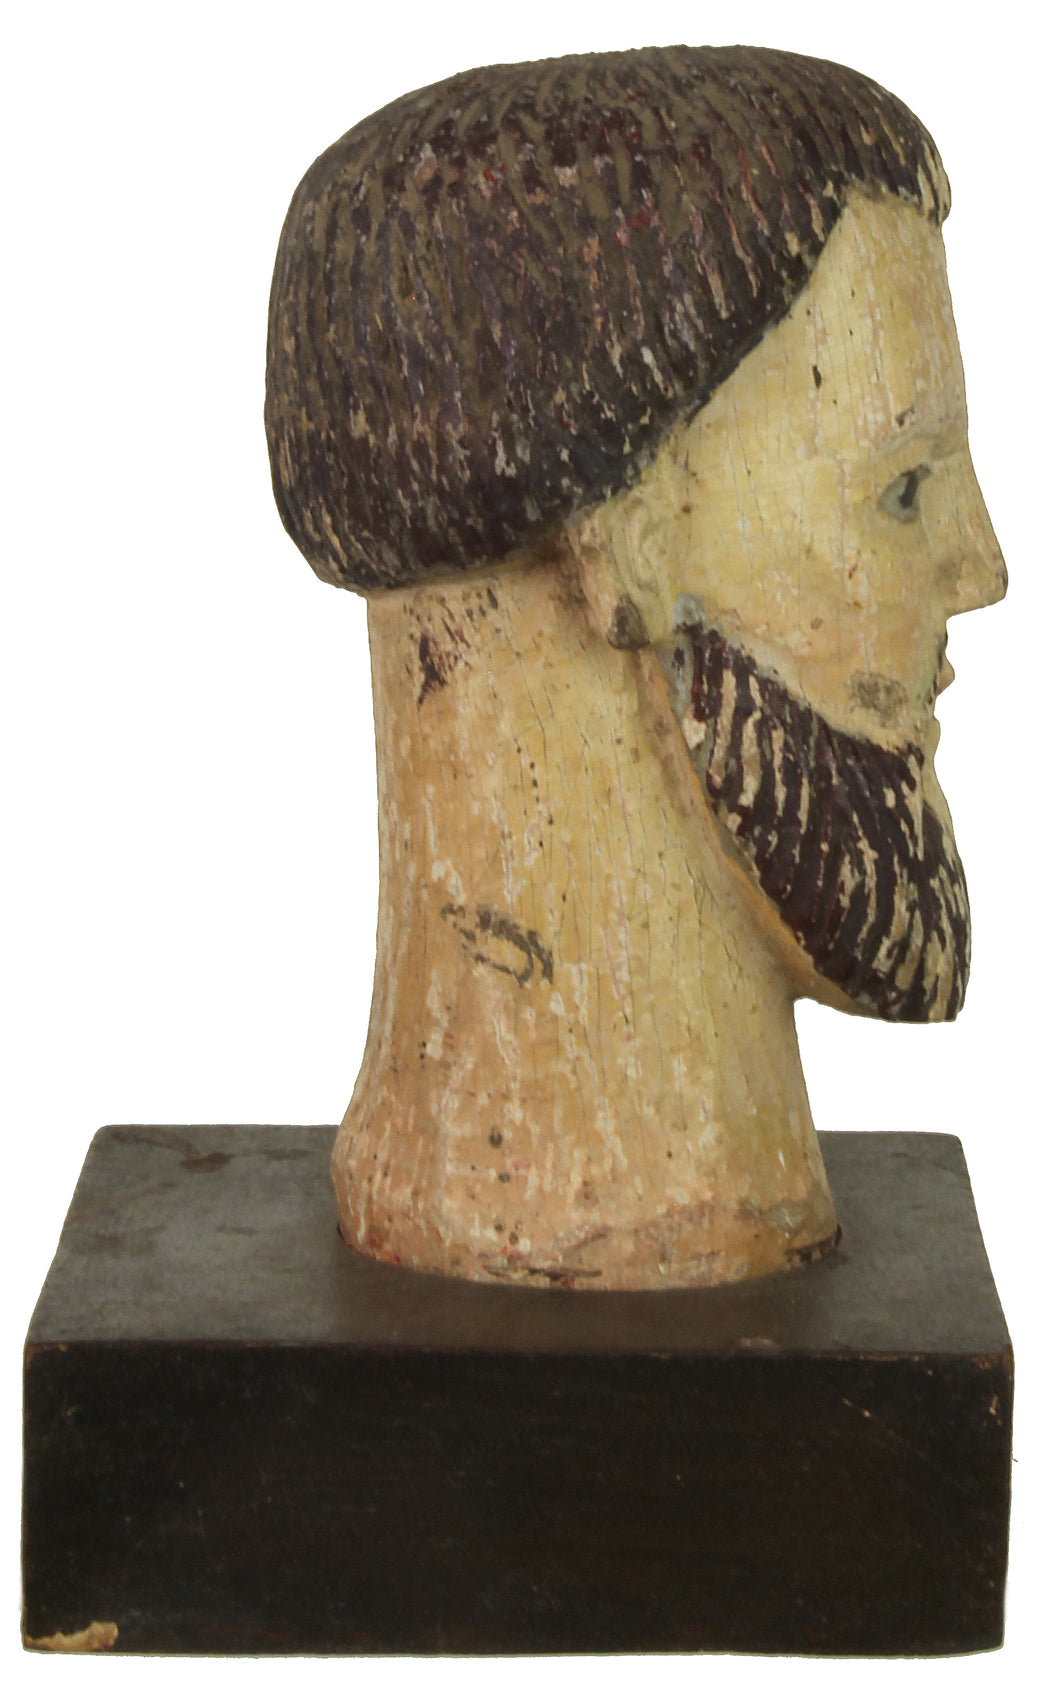 Antique Vietnamese Saint Figure Head | 4.75" - Niger Bend